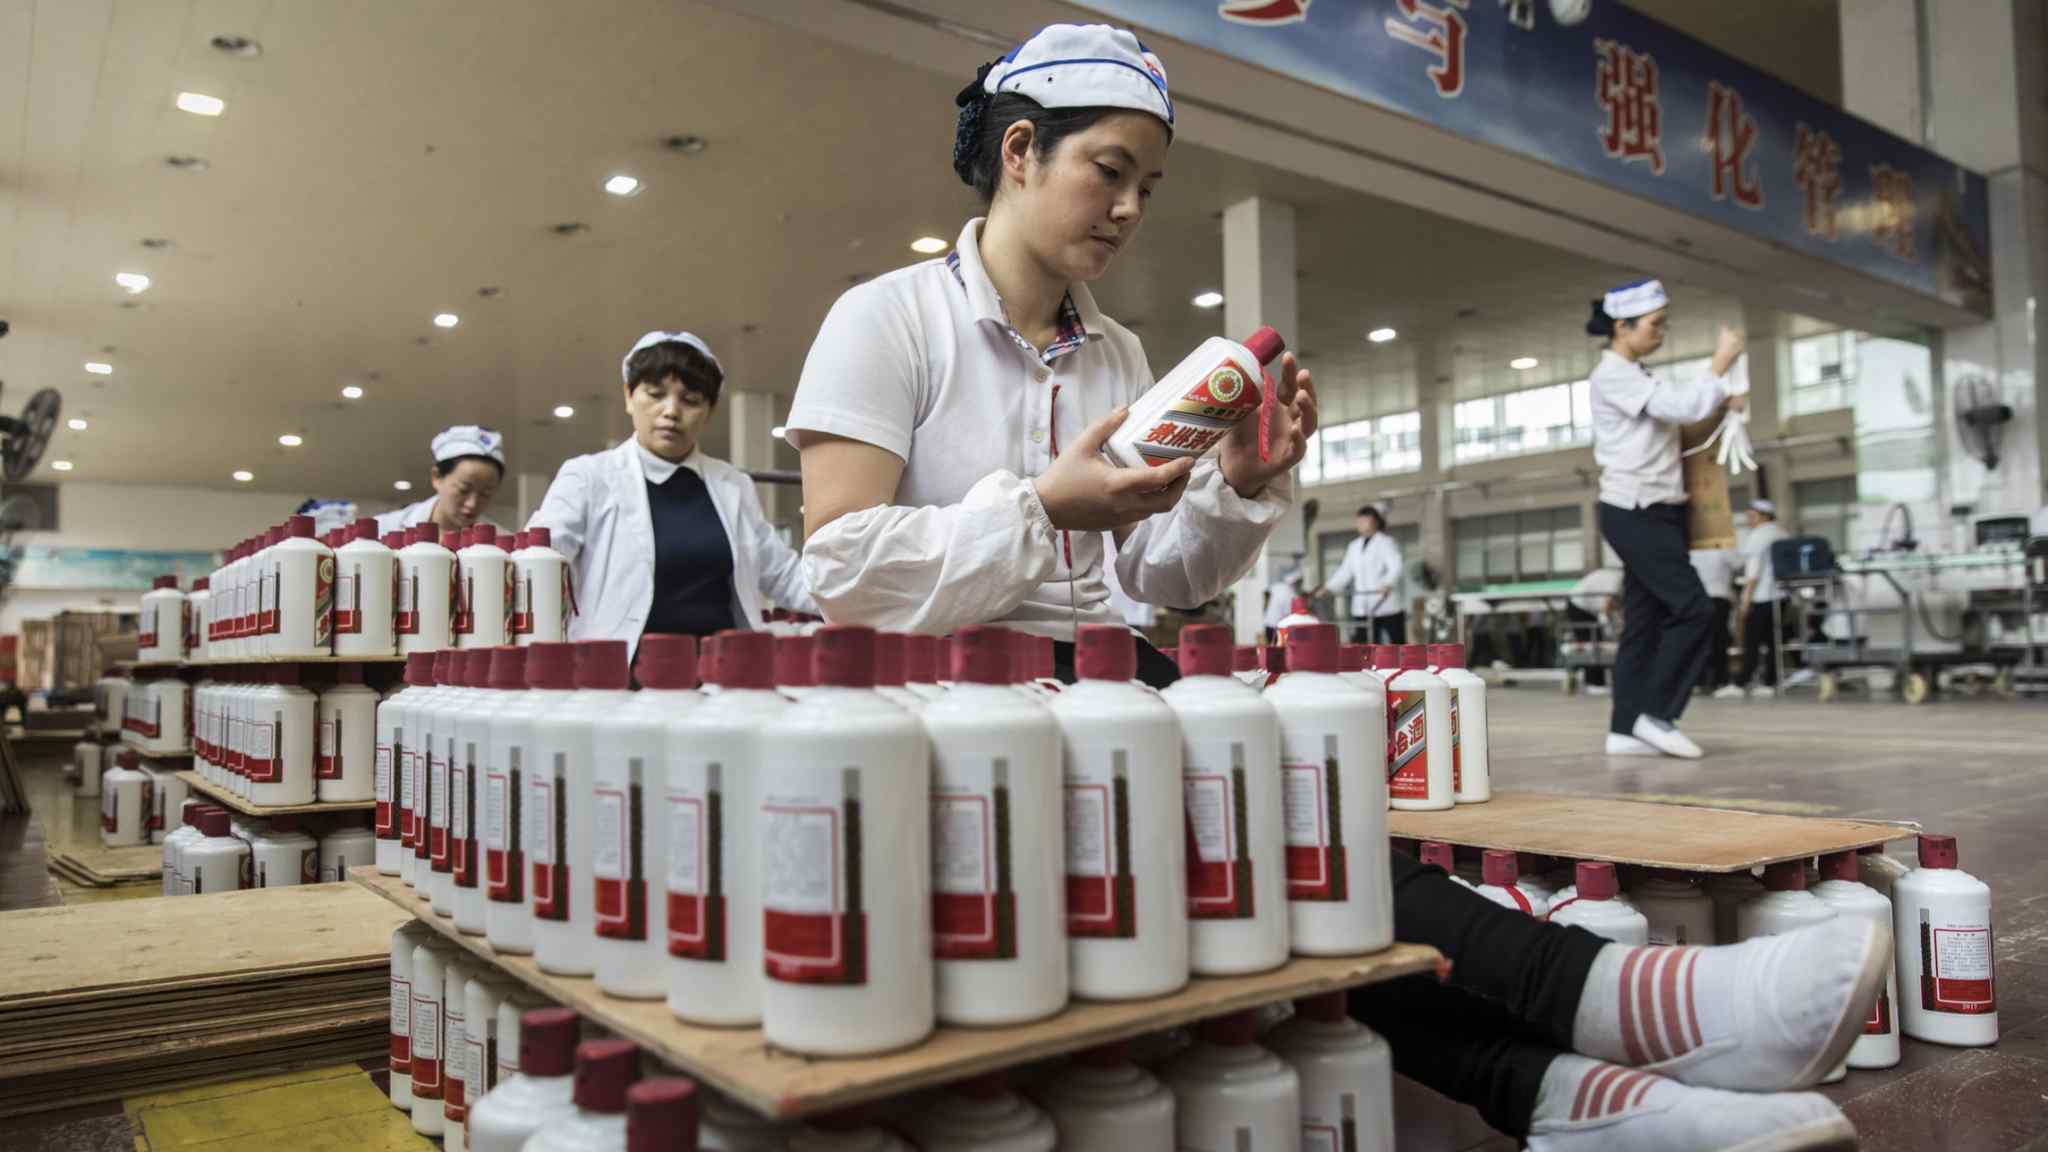 China’s baijiu makers risk hangover from liquor glut despite new year’s binge